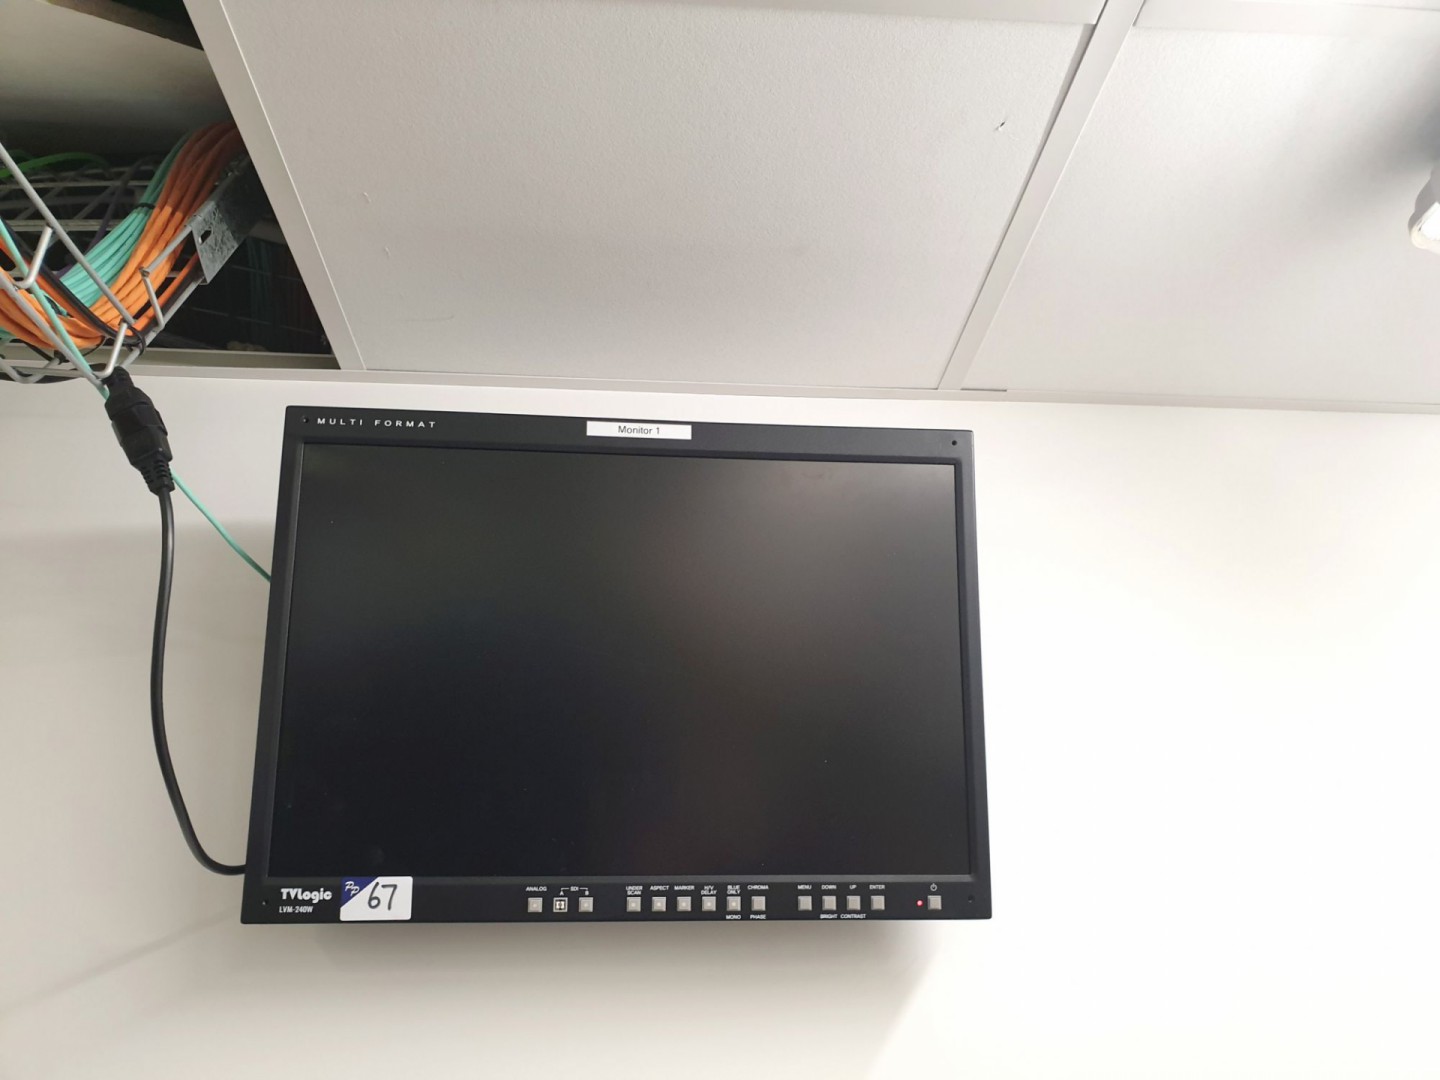 TV Logic LVM-240W multi format LCD monitor on wall...